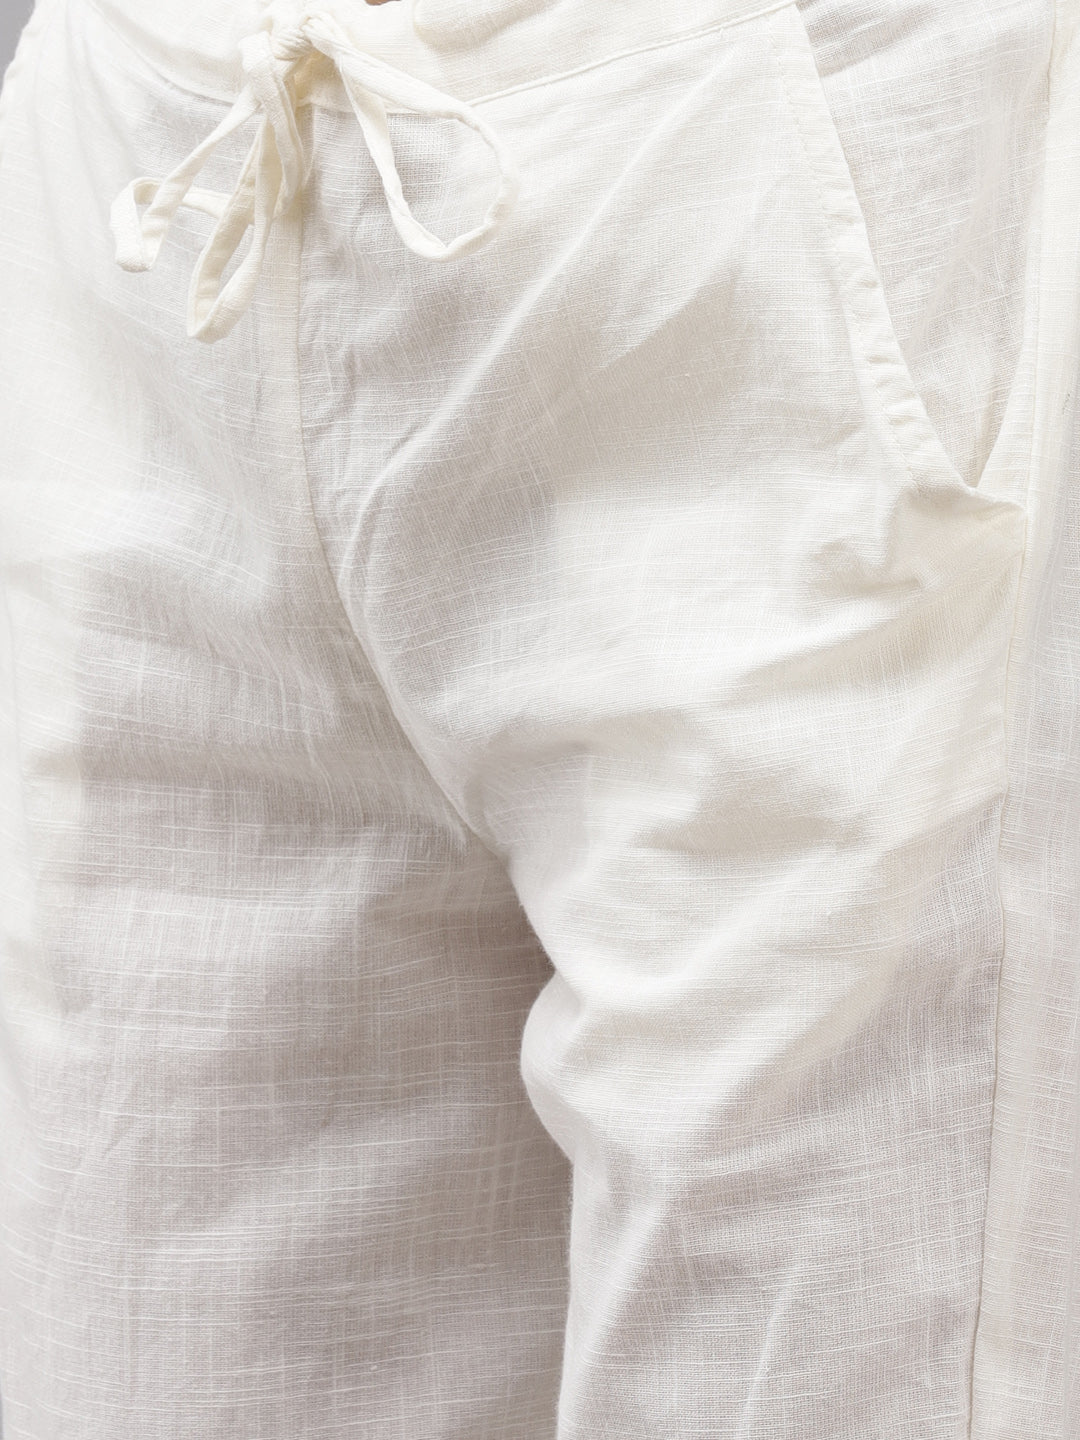 Women's Cotton Green & White Embroidered A-Line Kurta Trouser Set - Navyaa